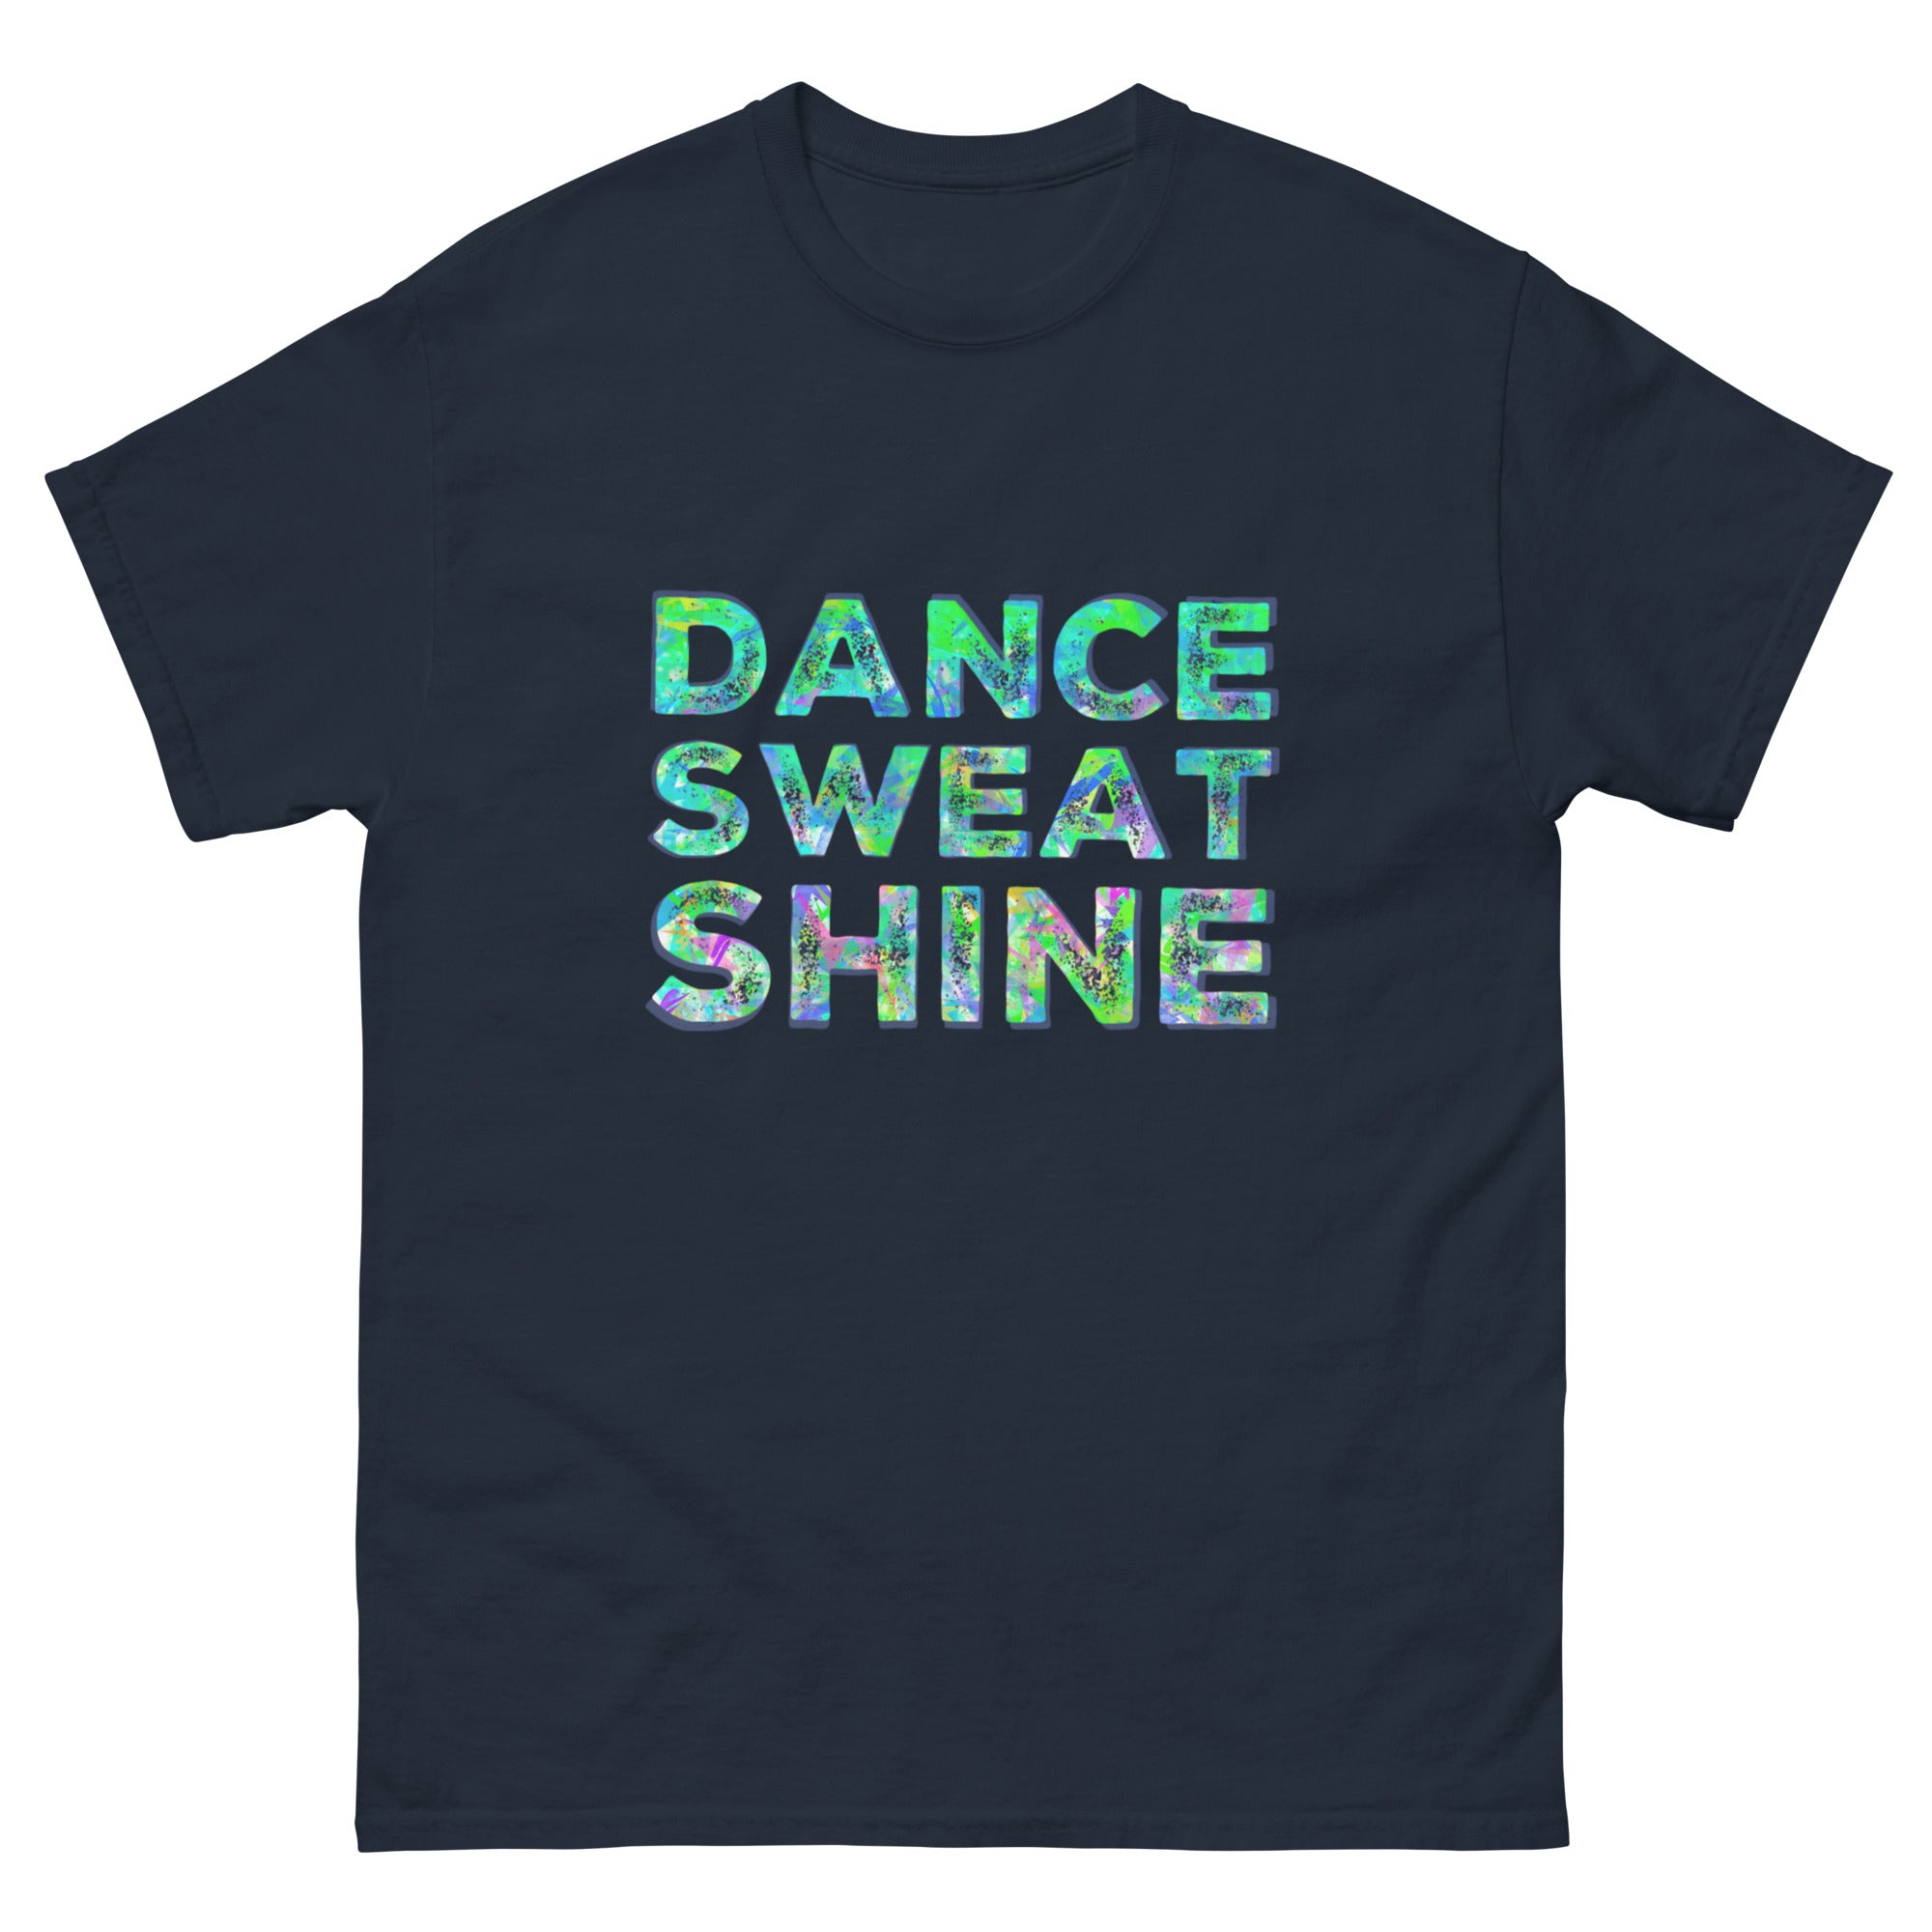 Dance, Sweat, Shine - Men's classic tee